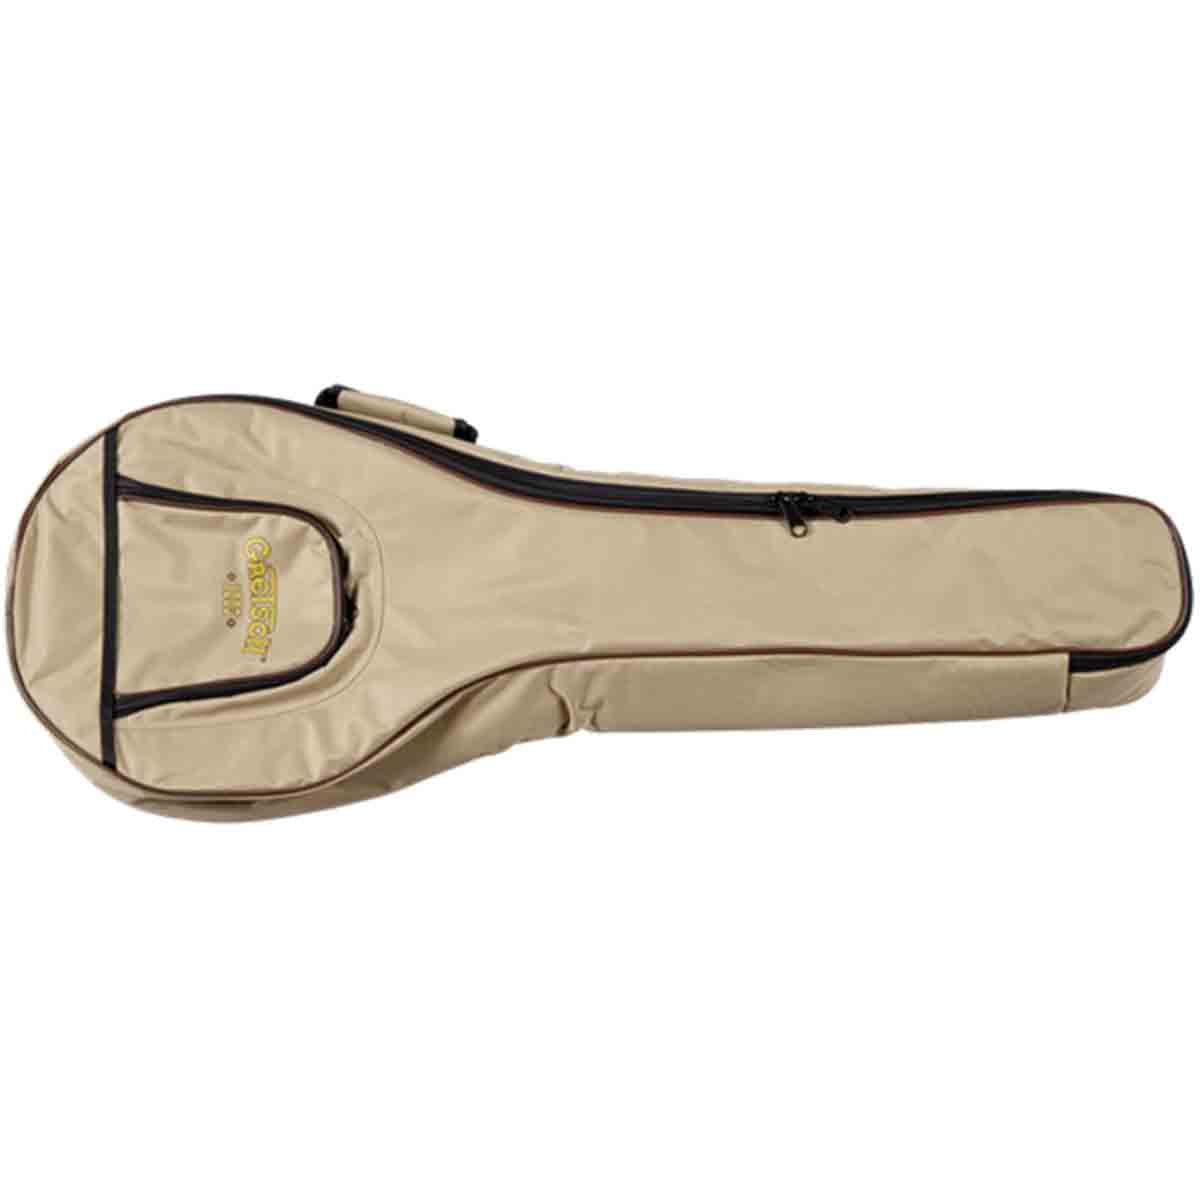 Gretsch G2184 Broadkaster Banjo Guitar Gig Bag Brown - 0996485000